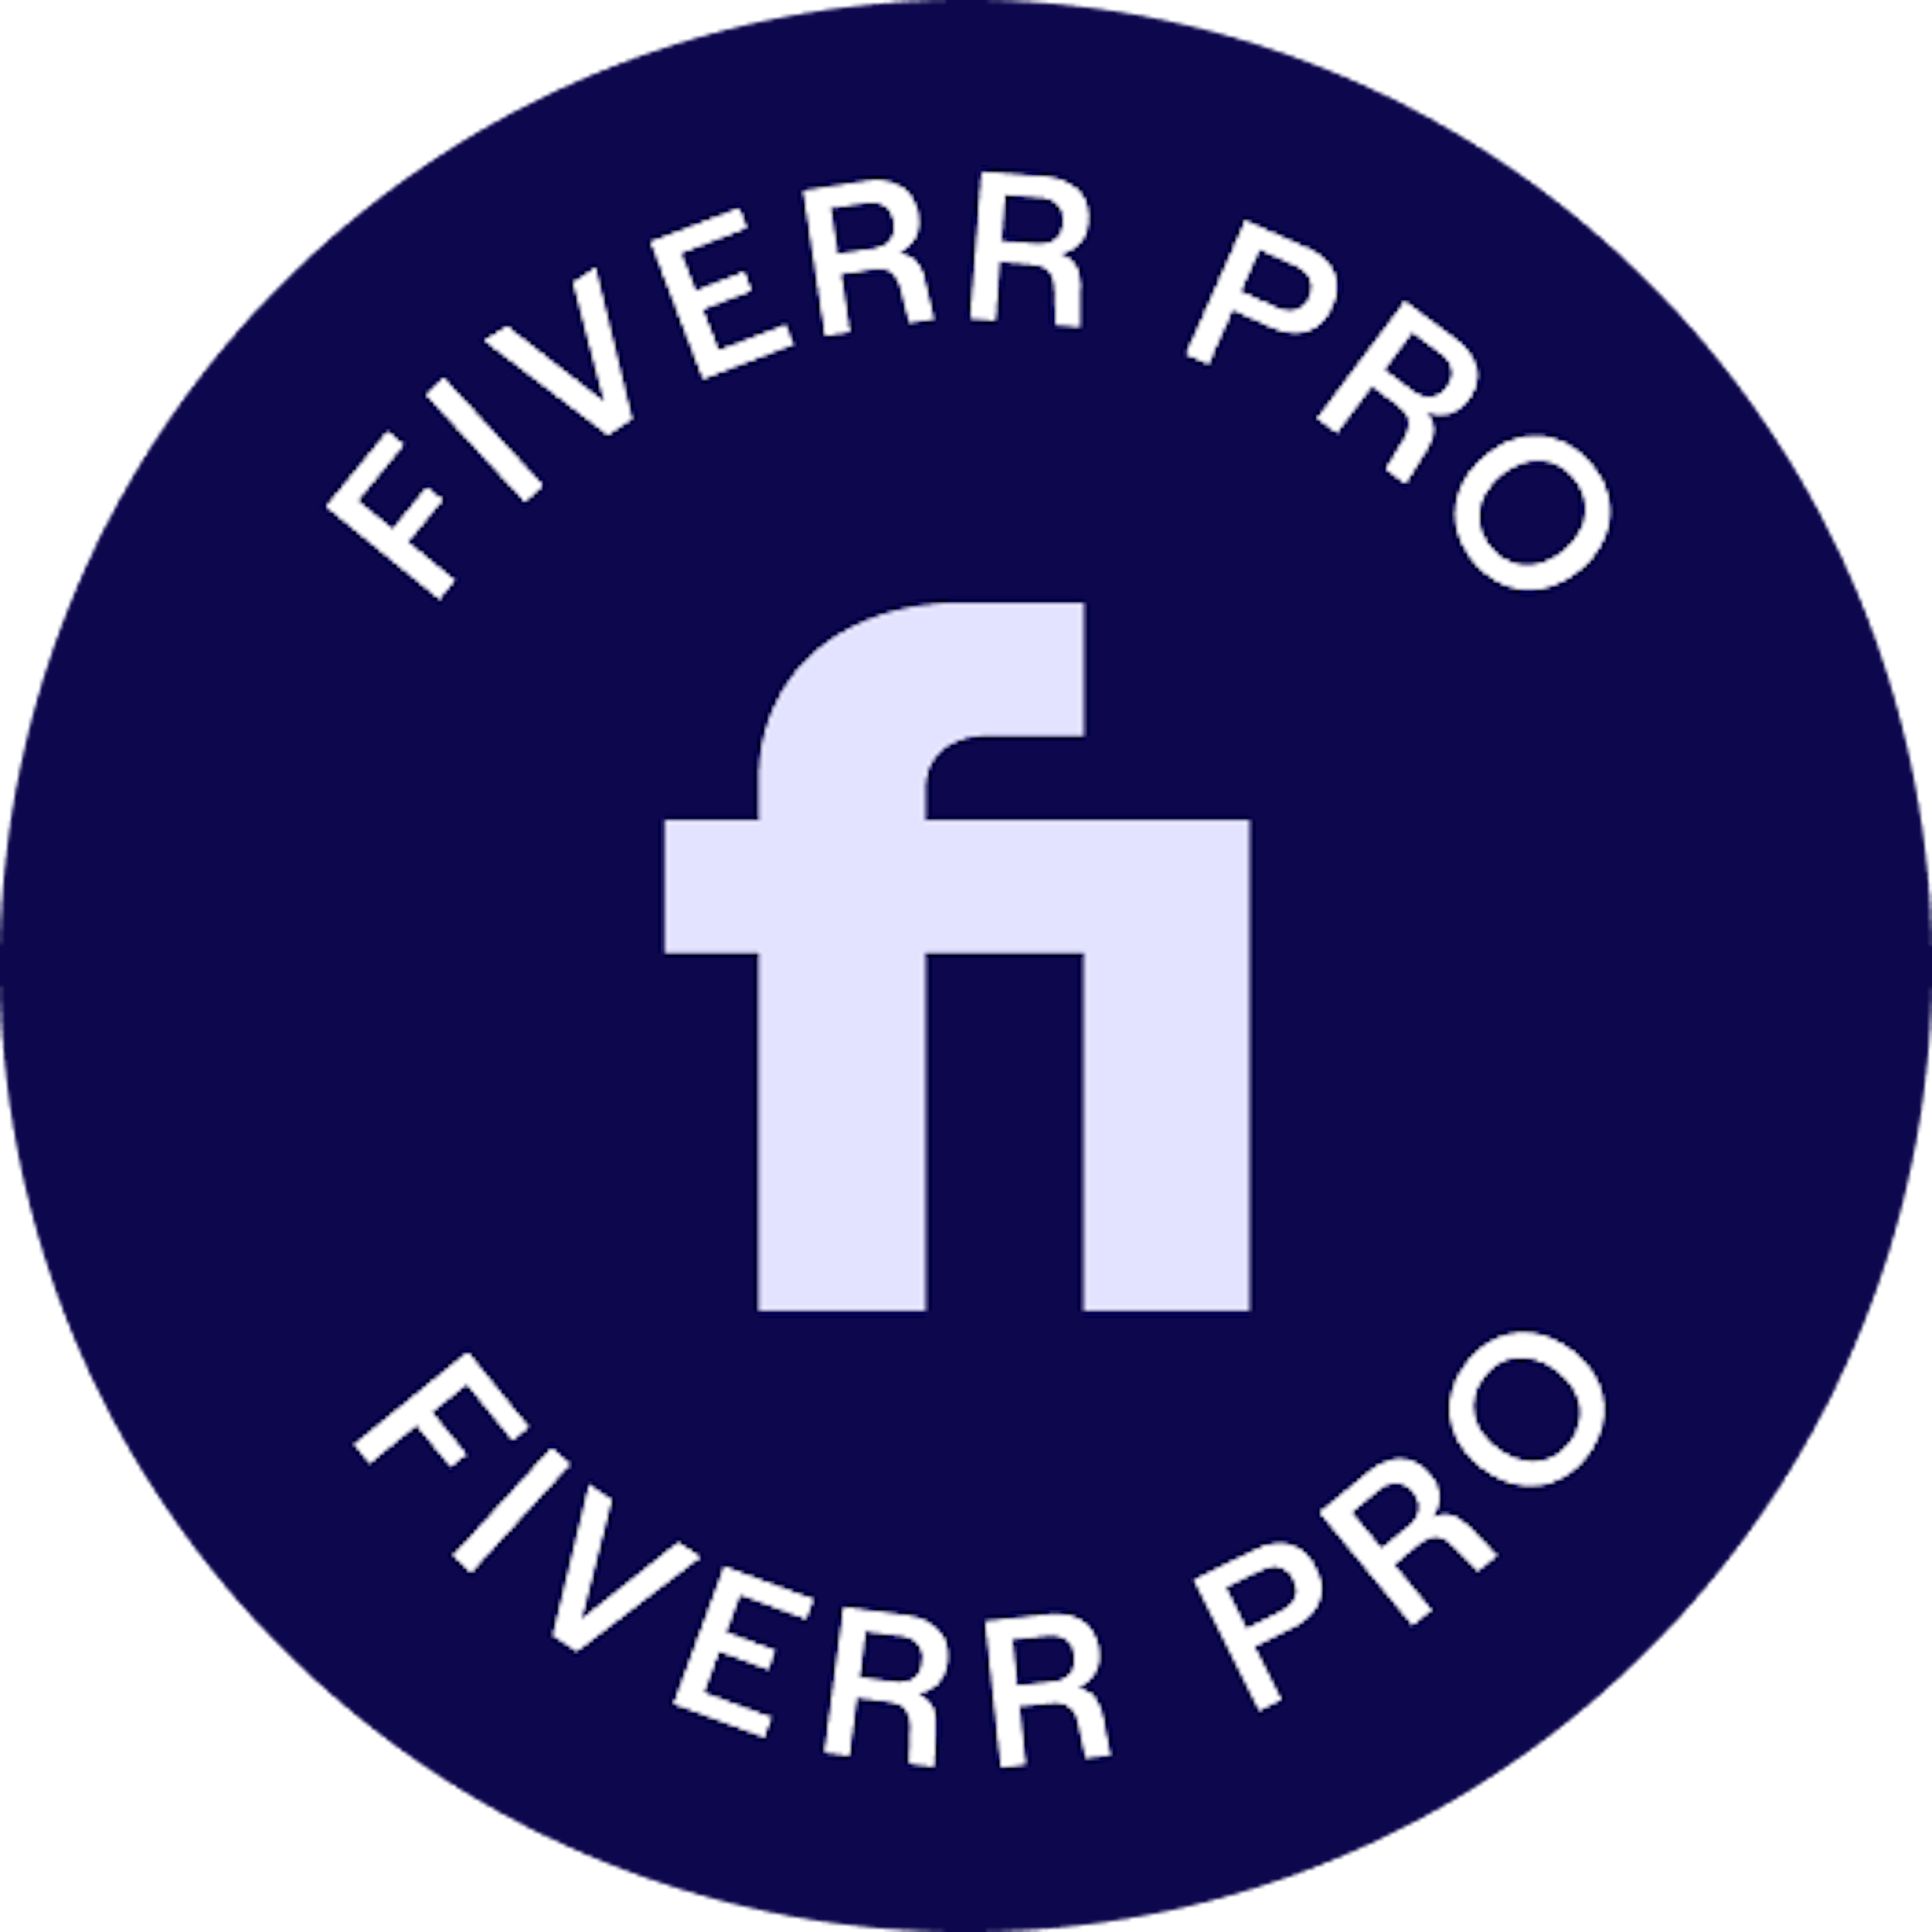 Fiverr Pro Logo